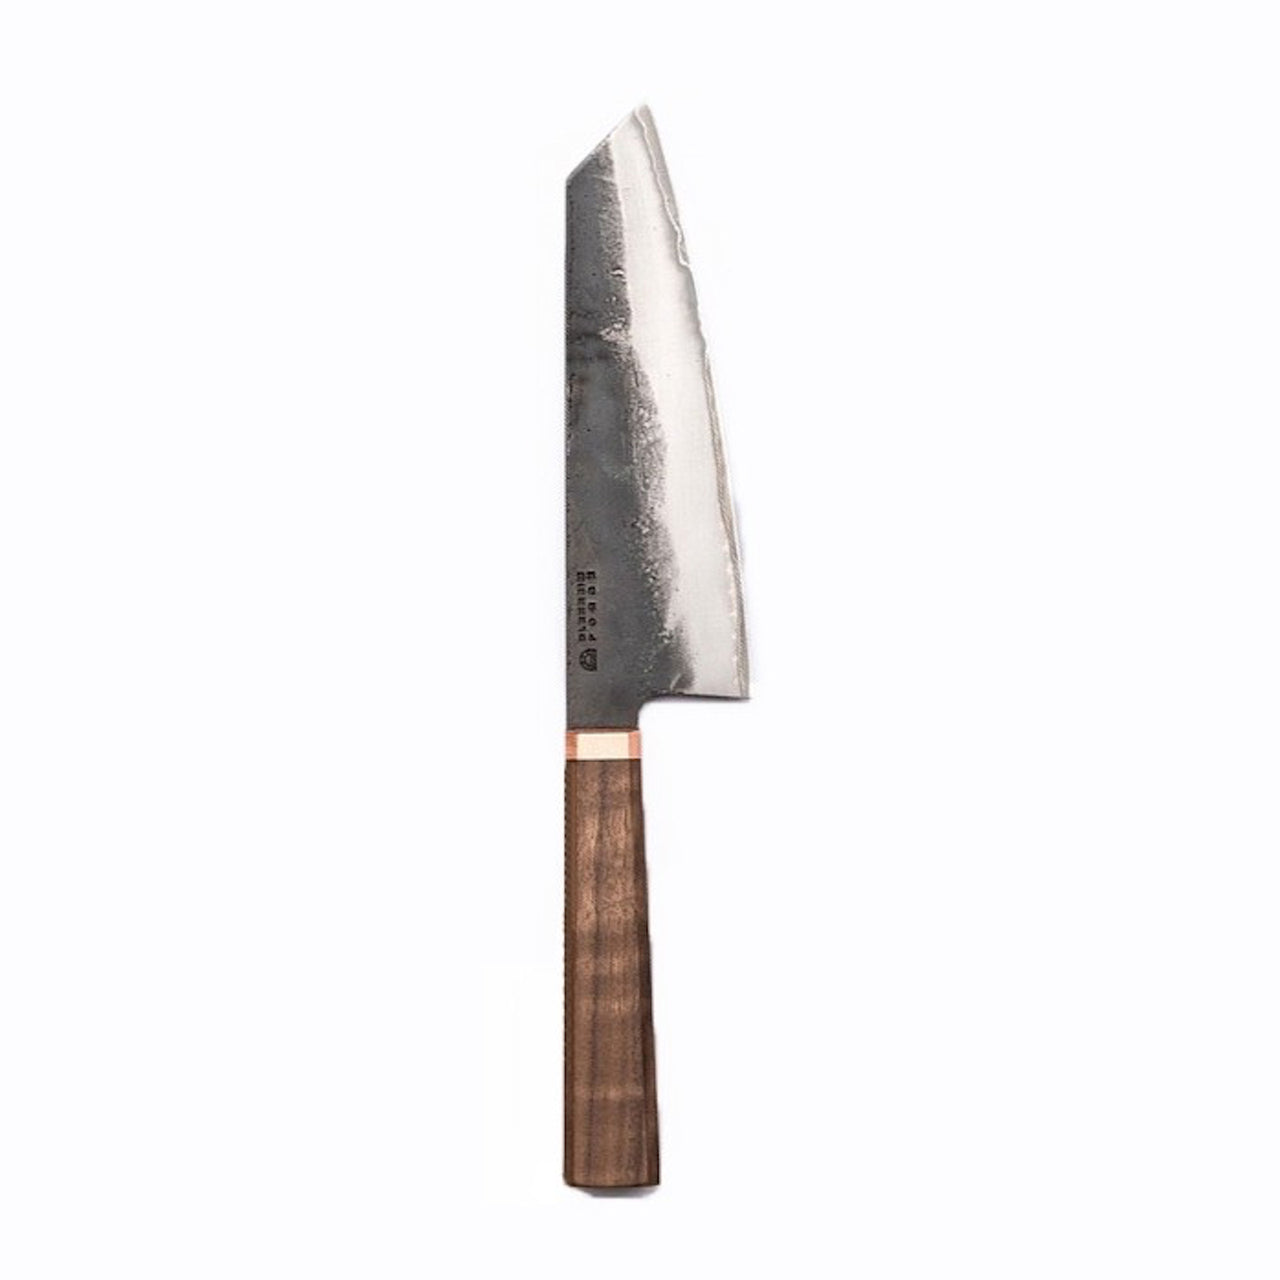 Blenheim Forge 5 Knife Set